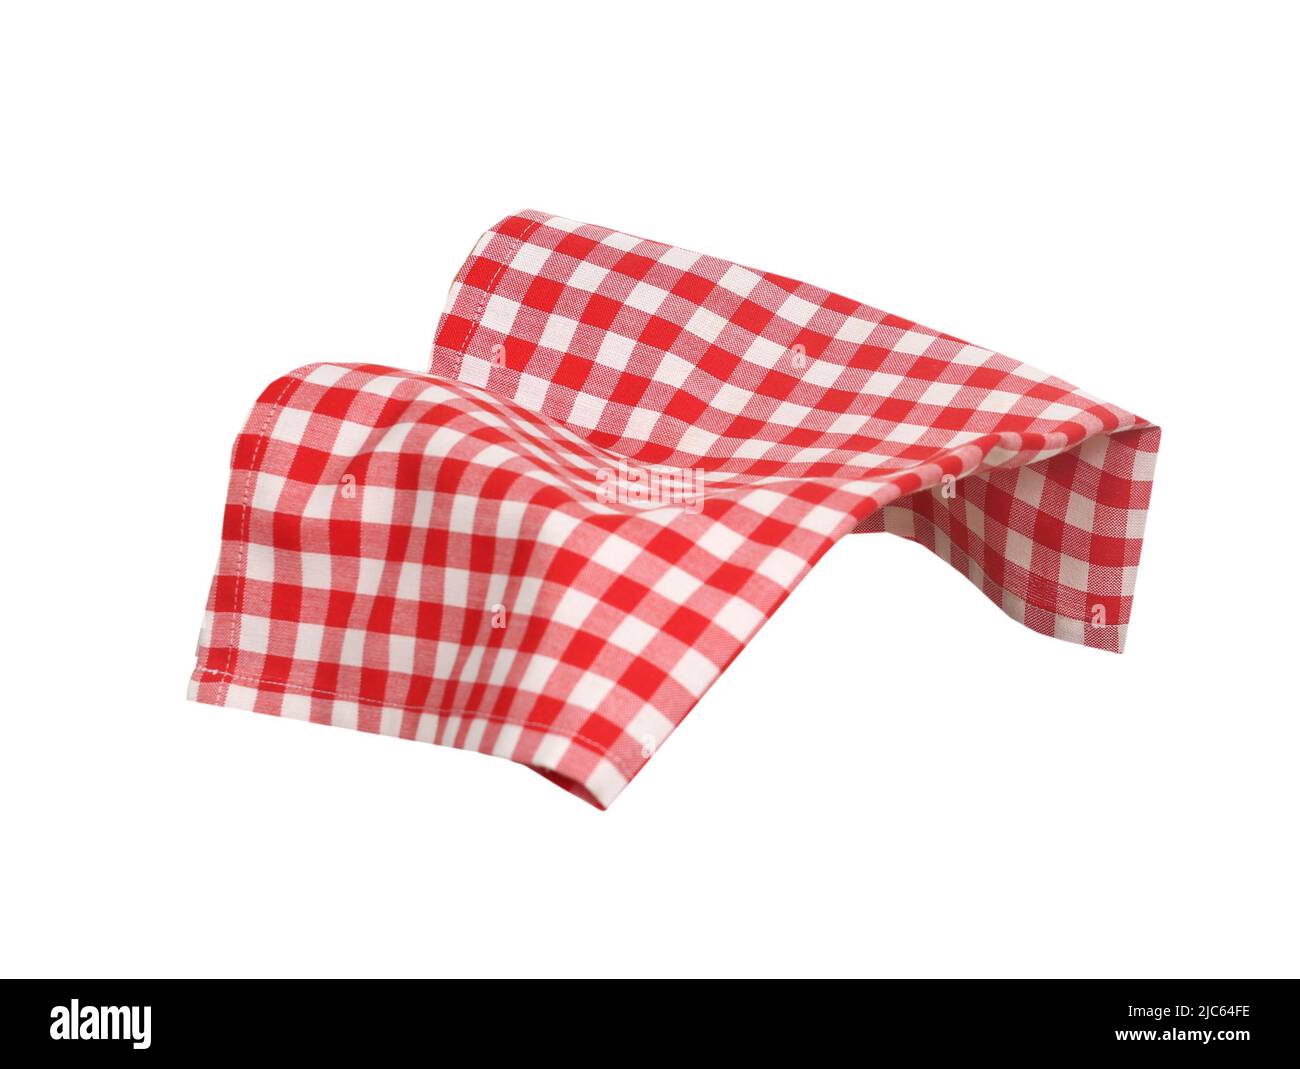 https://c8.alamy.com/comp/2JC64FE/picnic-checkered-towel-isolateddish-cloth-promortion-designfood-displaygingham-napkinchecked-kitchen-tablecloth-2JC64FE.jpg